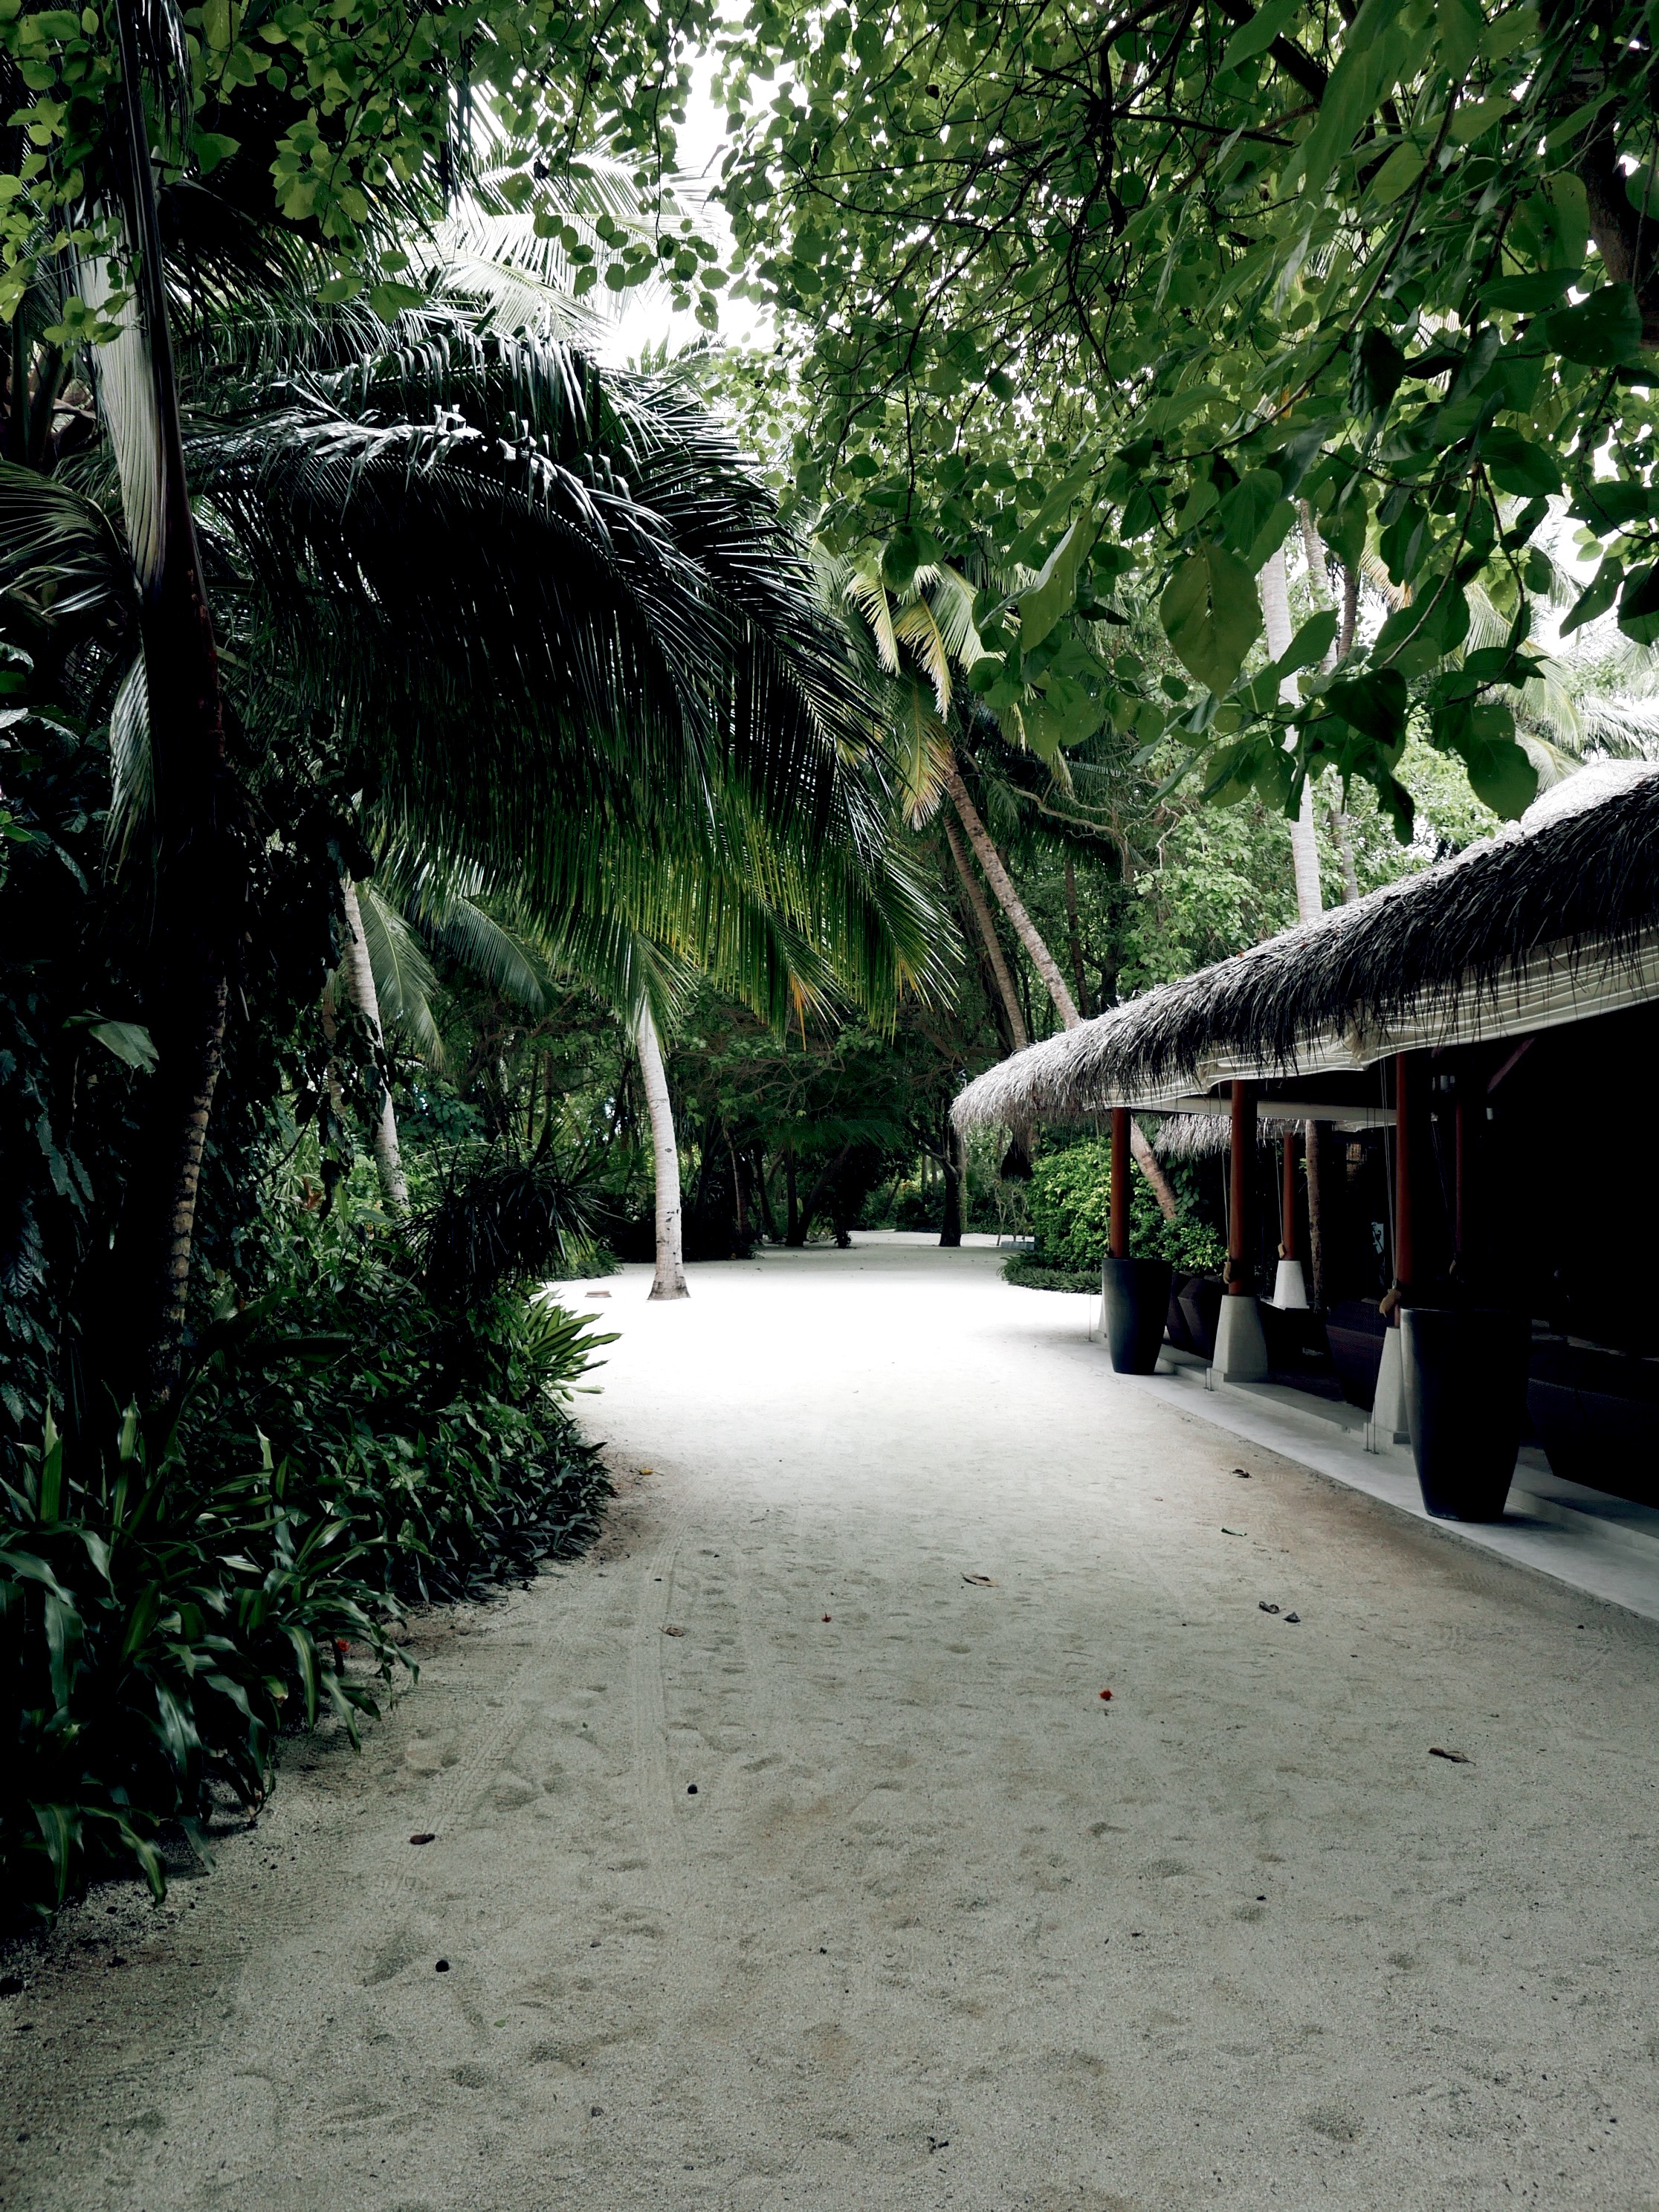 Baros-maldives-palm-trees-january-kuoni